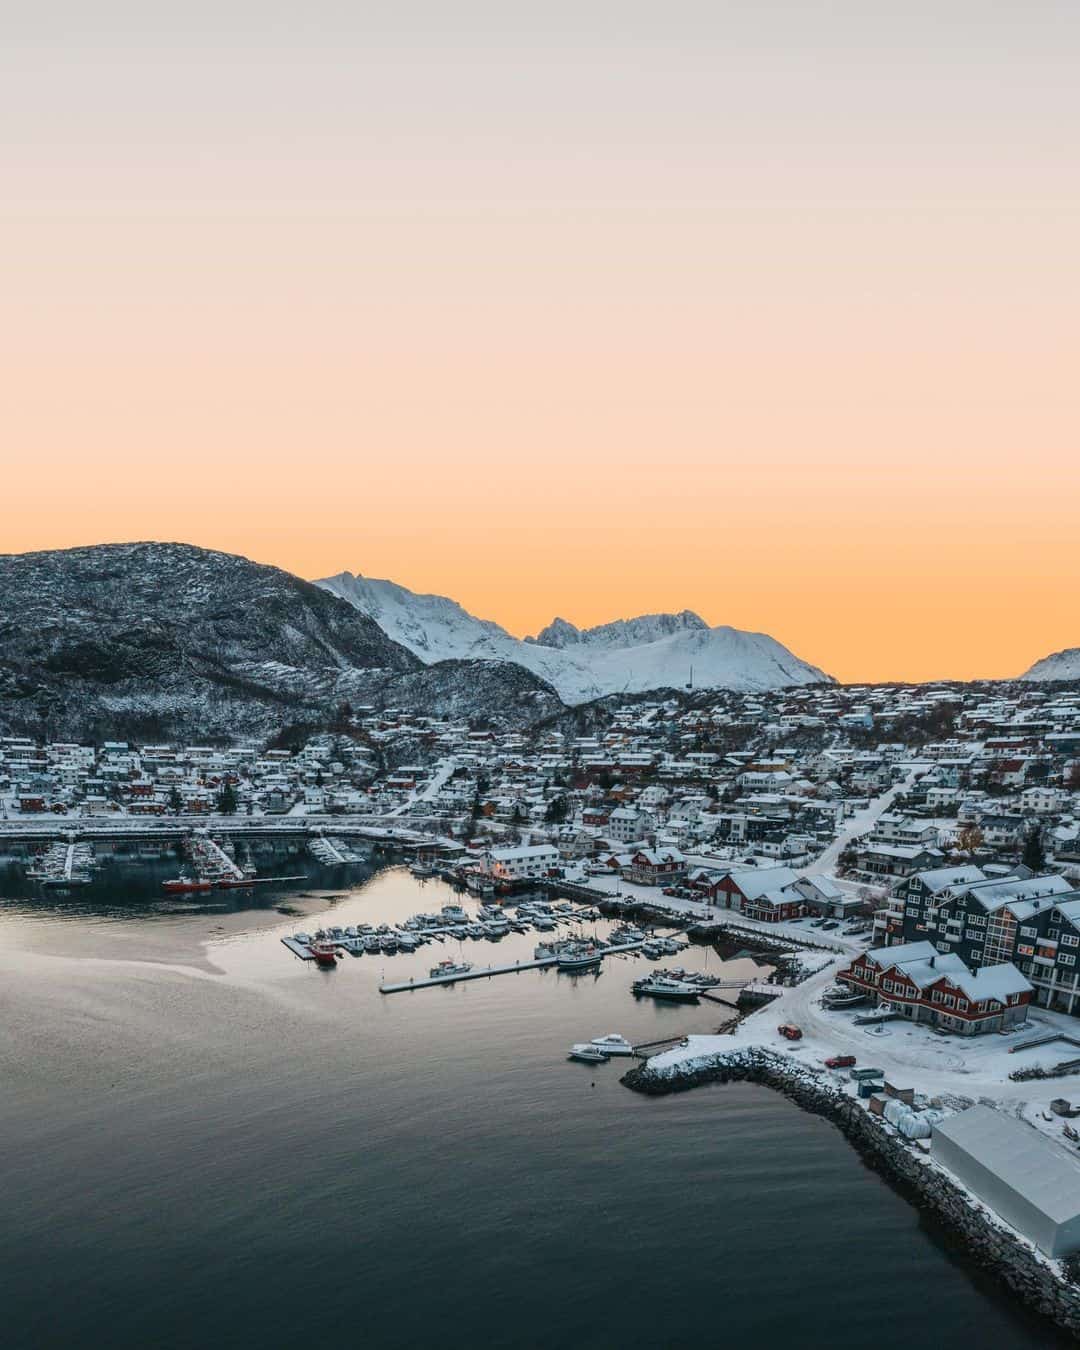 Magical Sceneries From Tromsø, Norway Through The Lens Of David Jensen